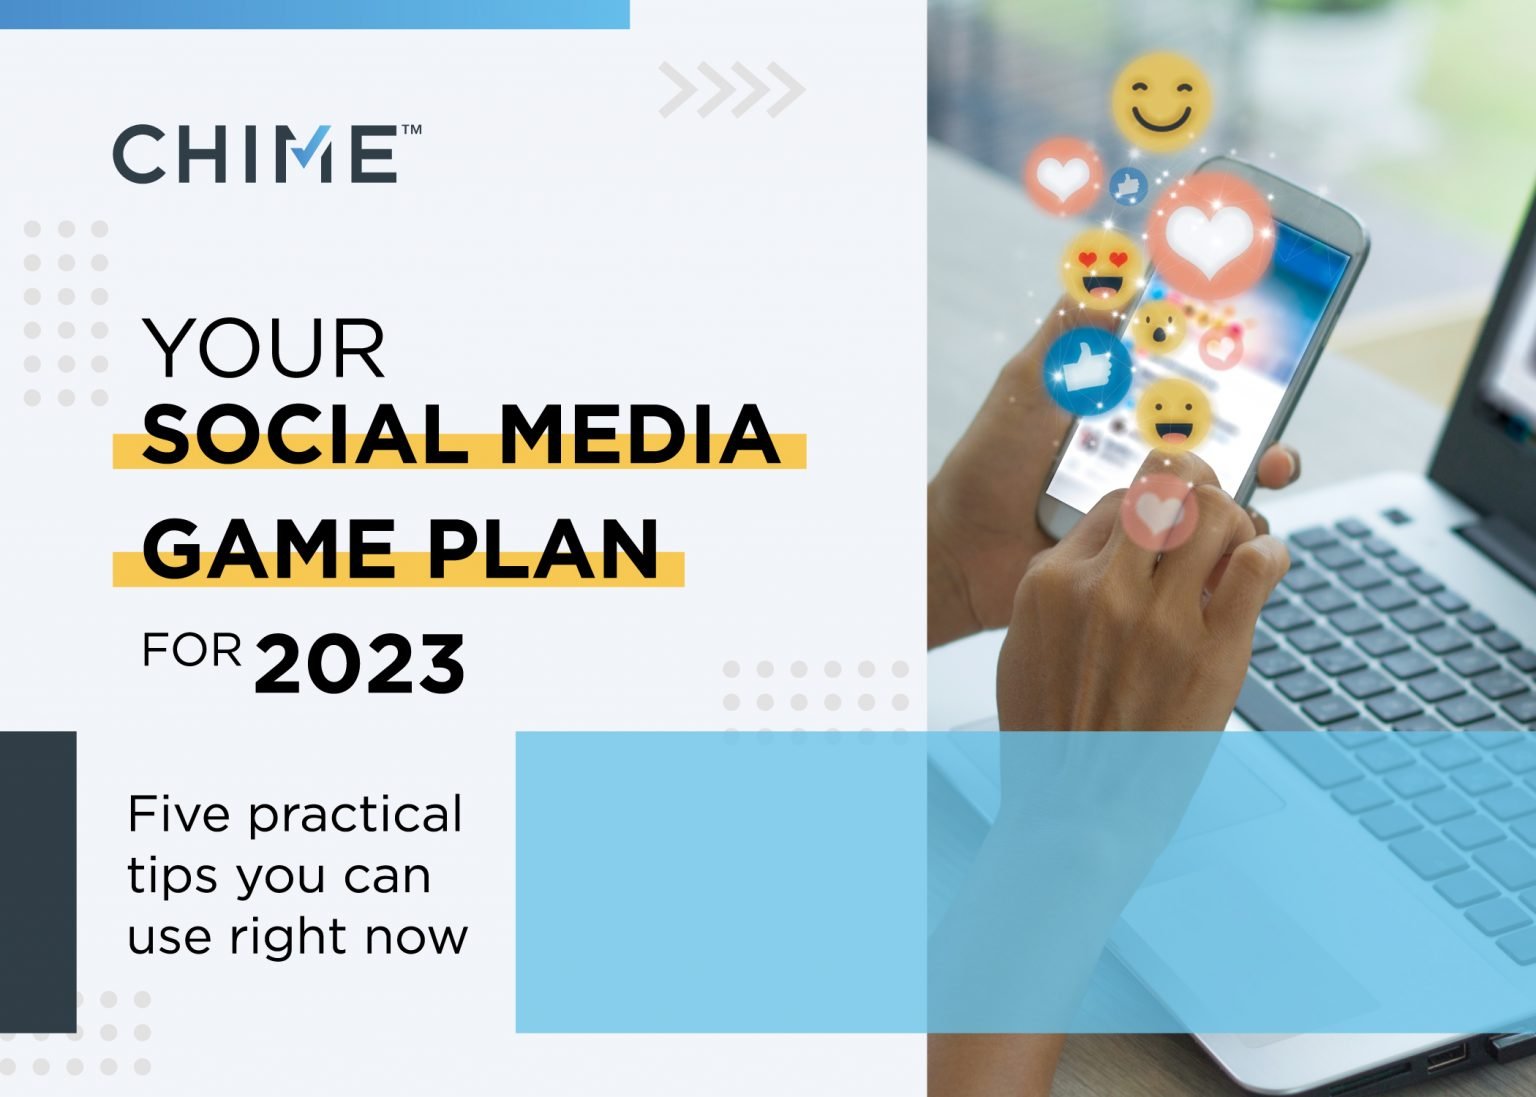 chime social media game plan 2023